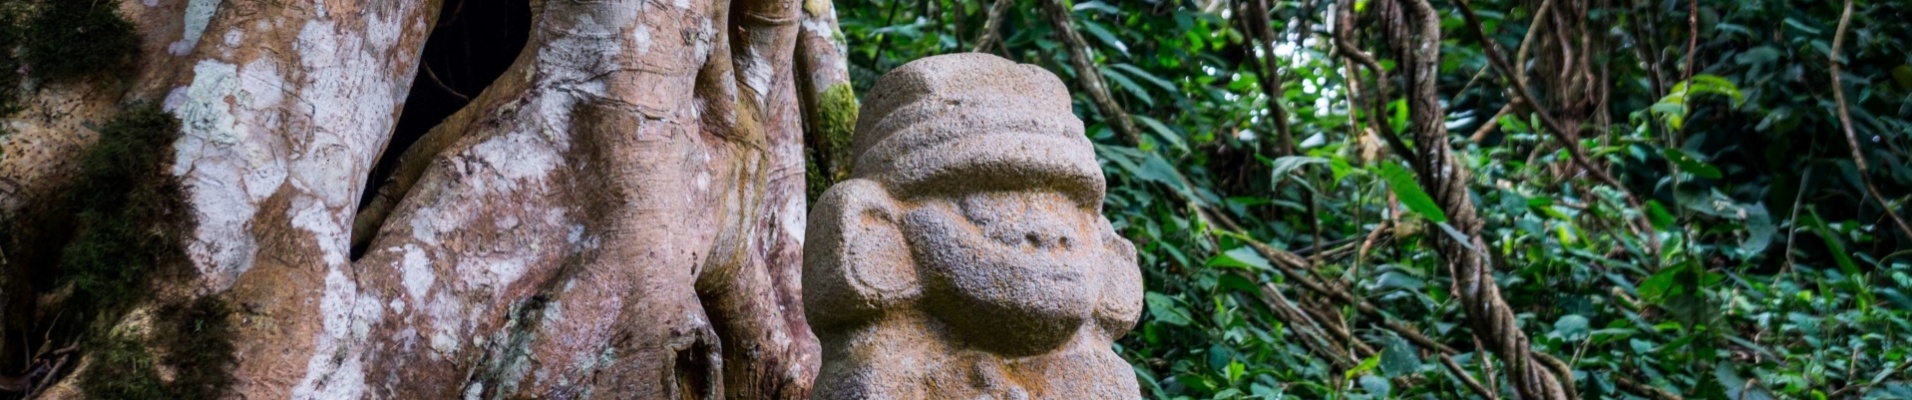 statue-san-agustin-colombie